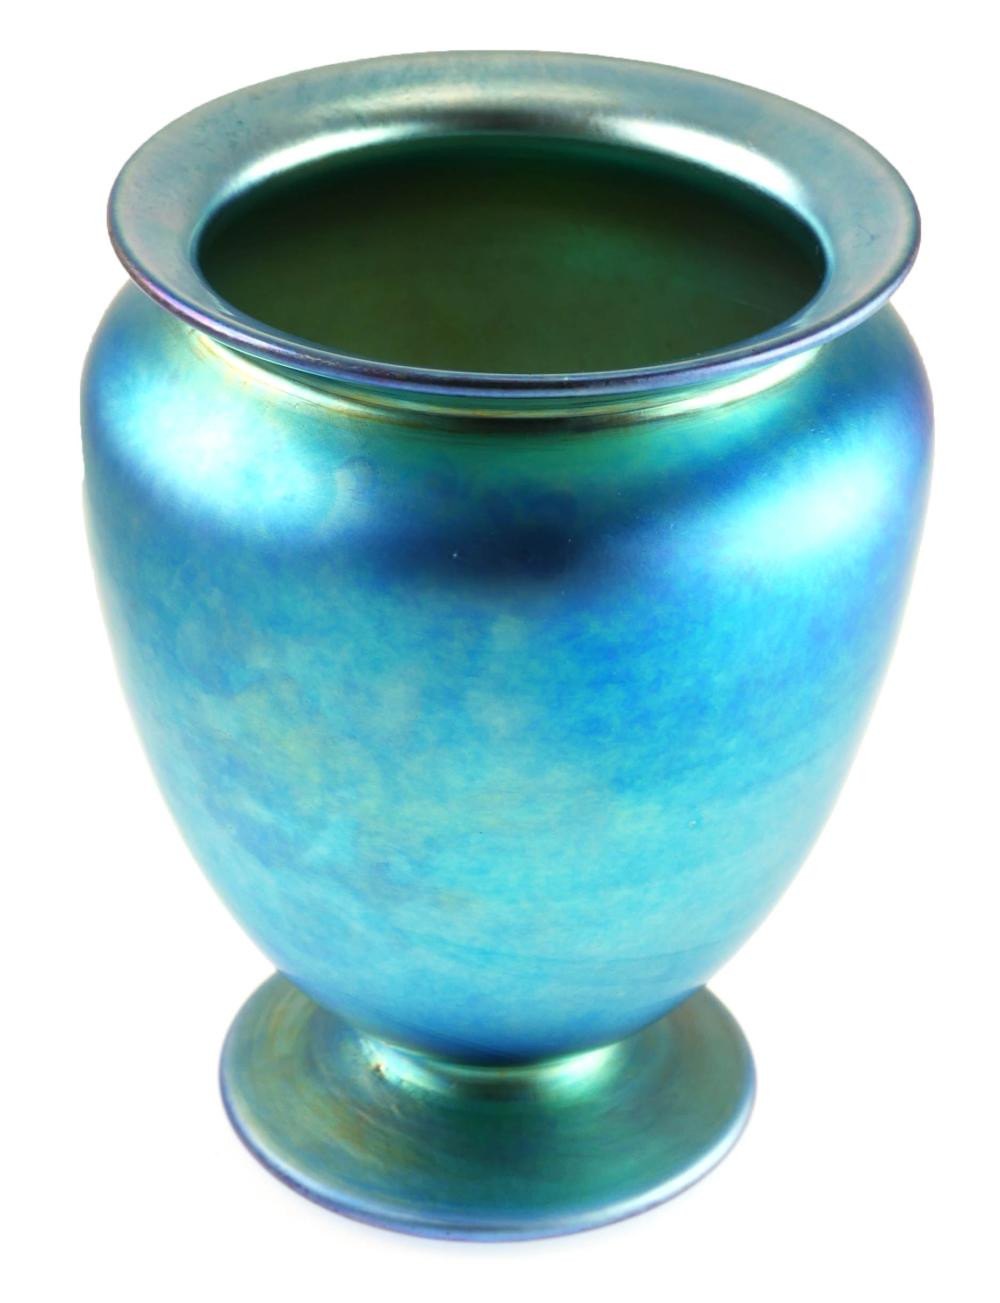 steuben vase value of steuben glass for sale at online auction buy rare steuben glass with regard to steuben aurene blue art glass vase